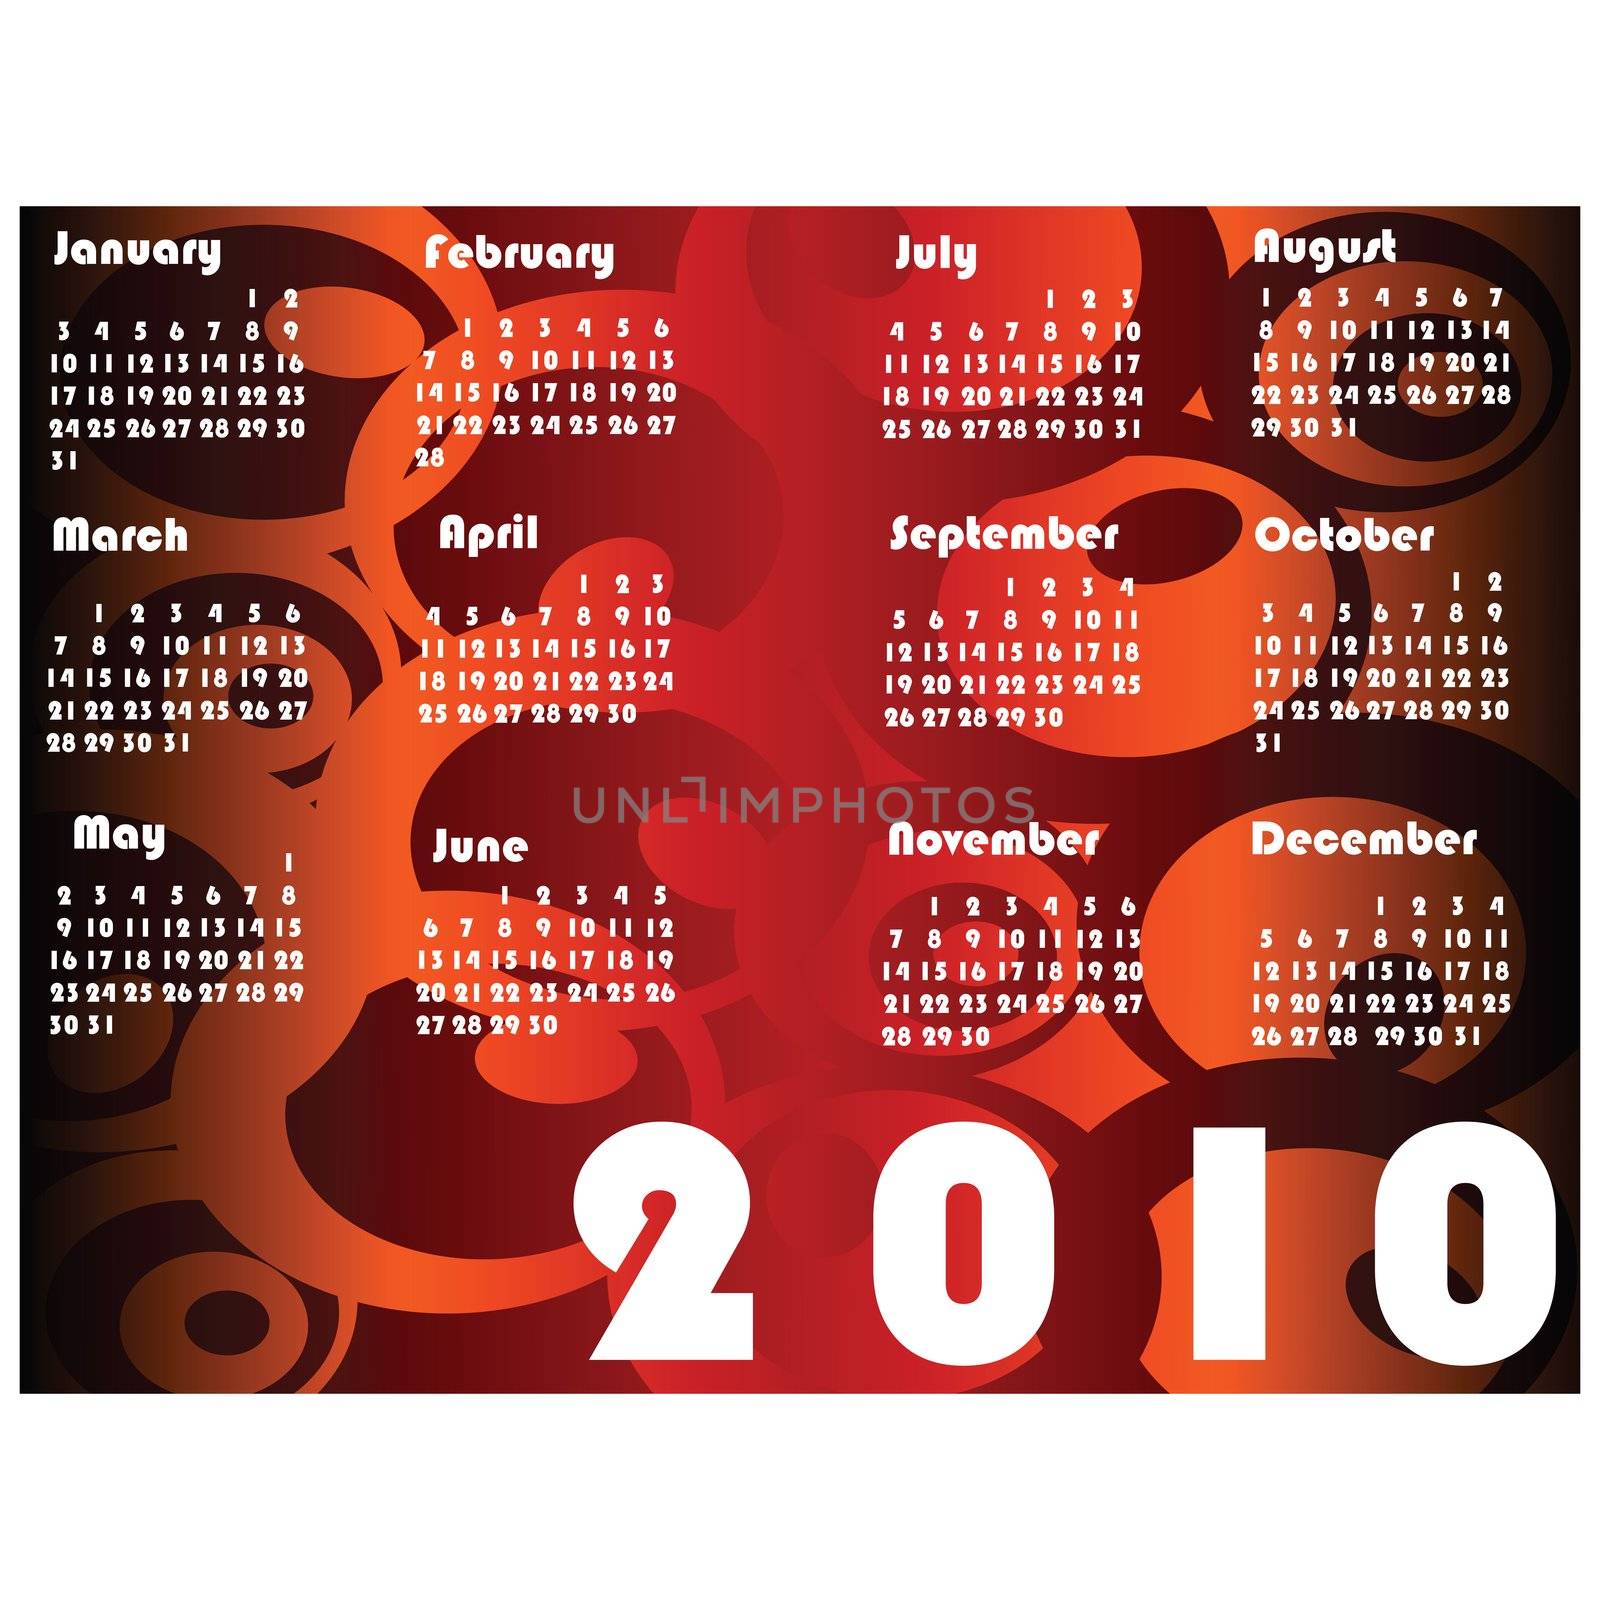 Pocket calendar for 2010